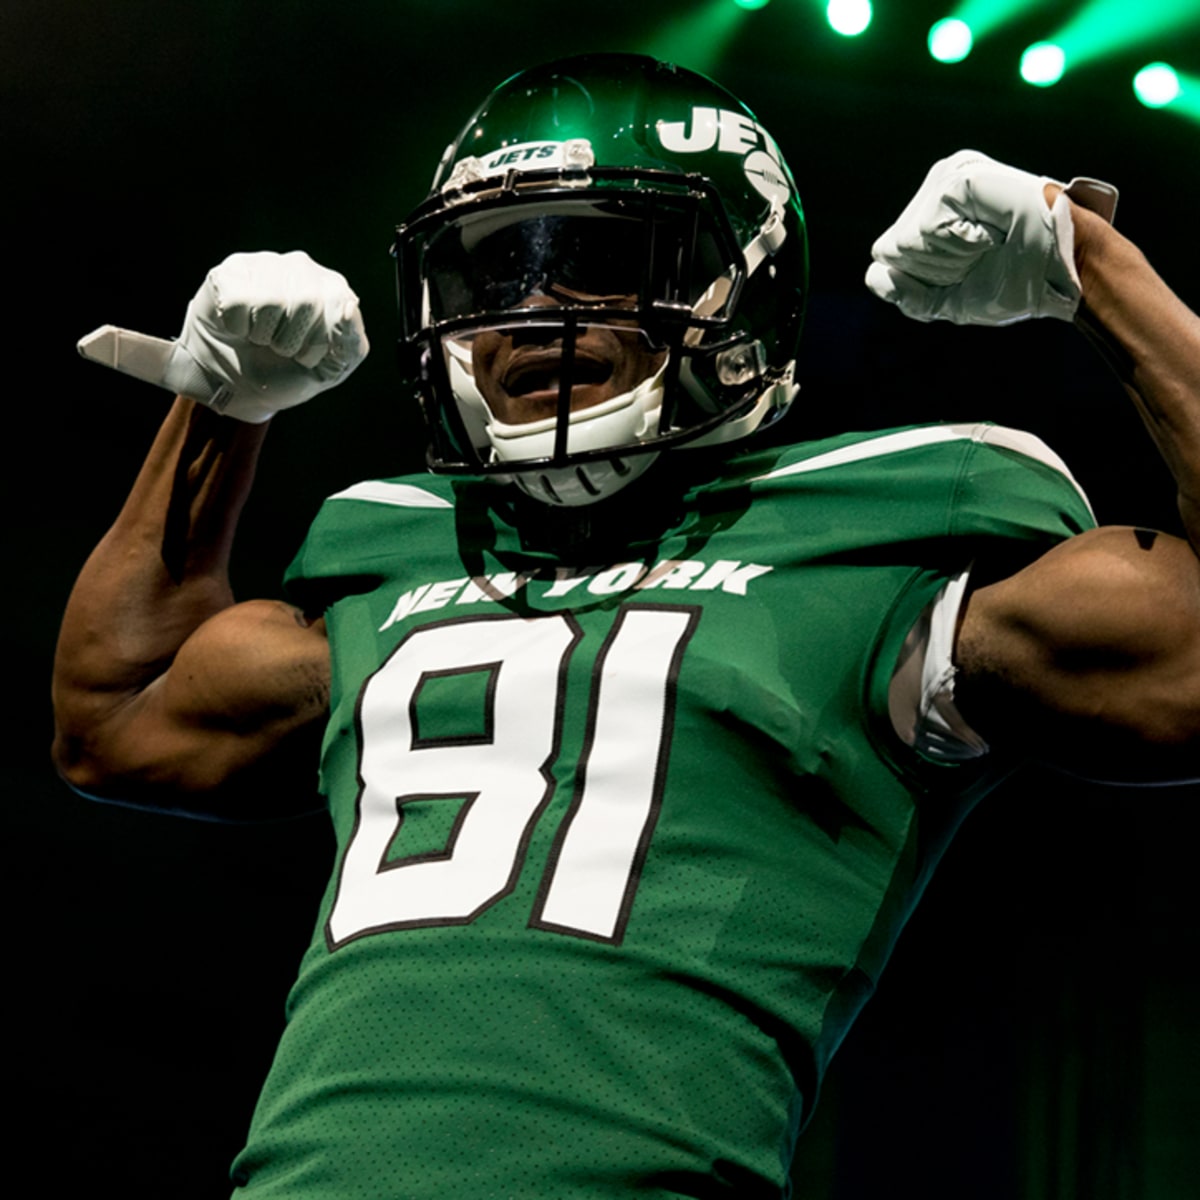 New York Jets unveil new uniforms